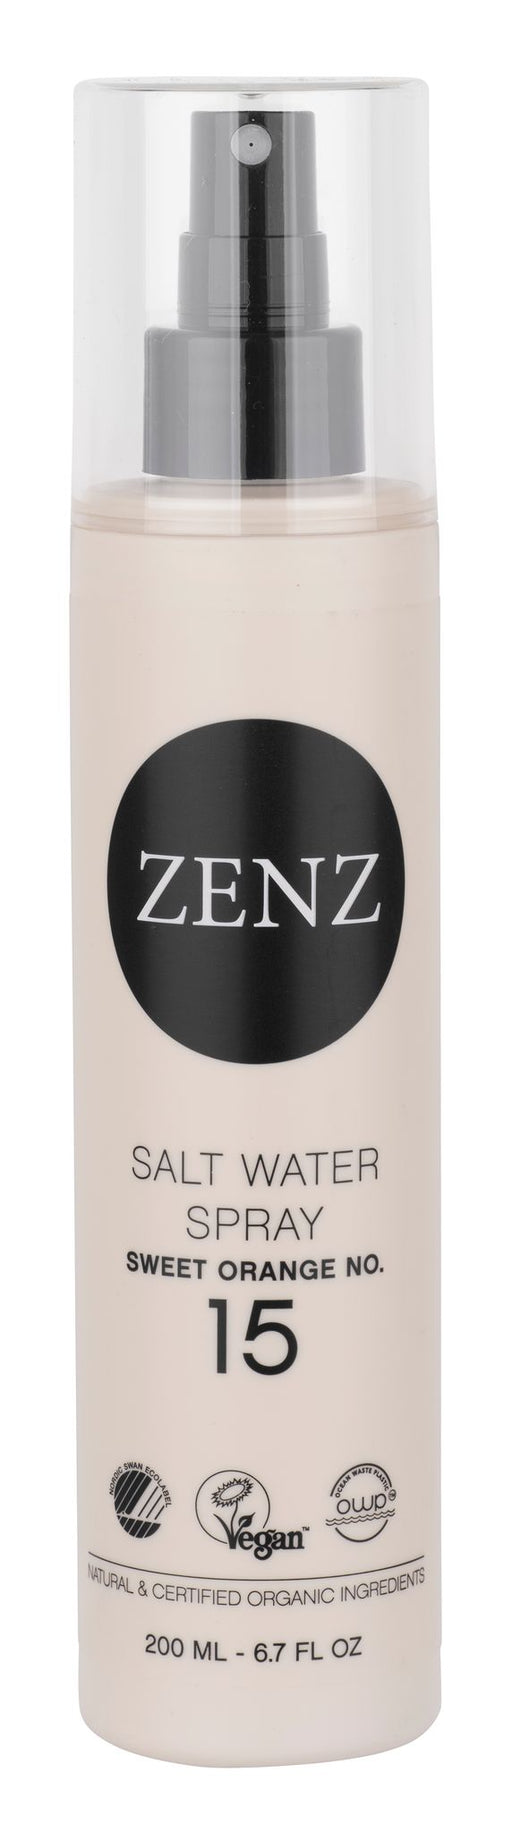 Zenz Sweet Orange No 15 Salt Water Spray - Clearance!